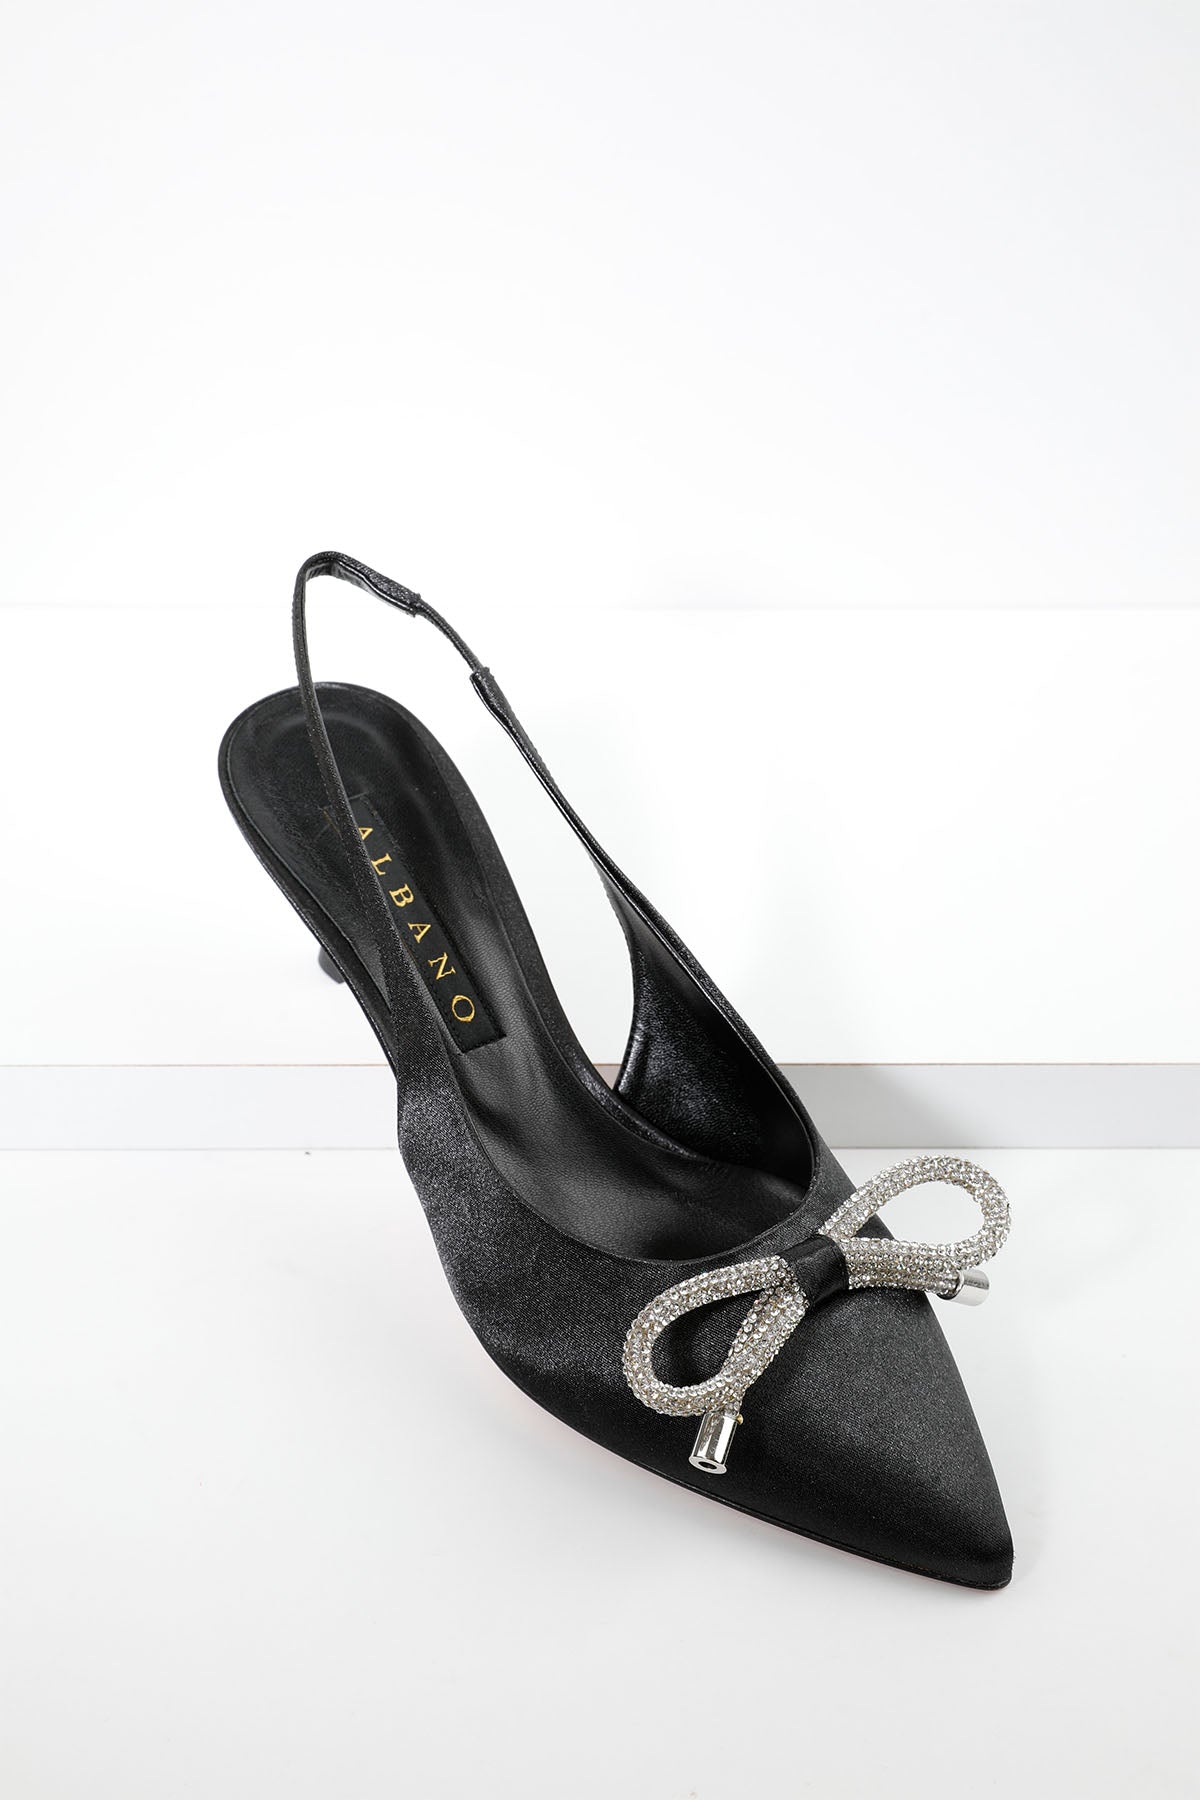 Albano Sivri Burun İnce Topuklu Abiye Ayakkabısı-Libas Trendy Fashion Store